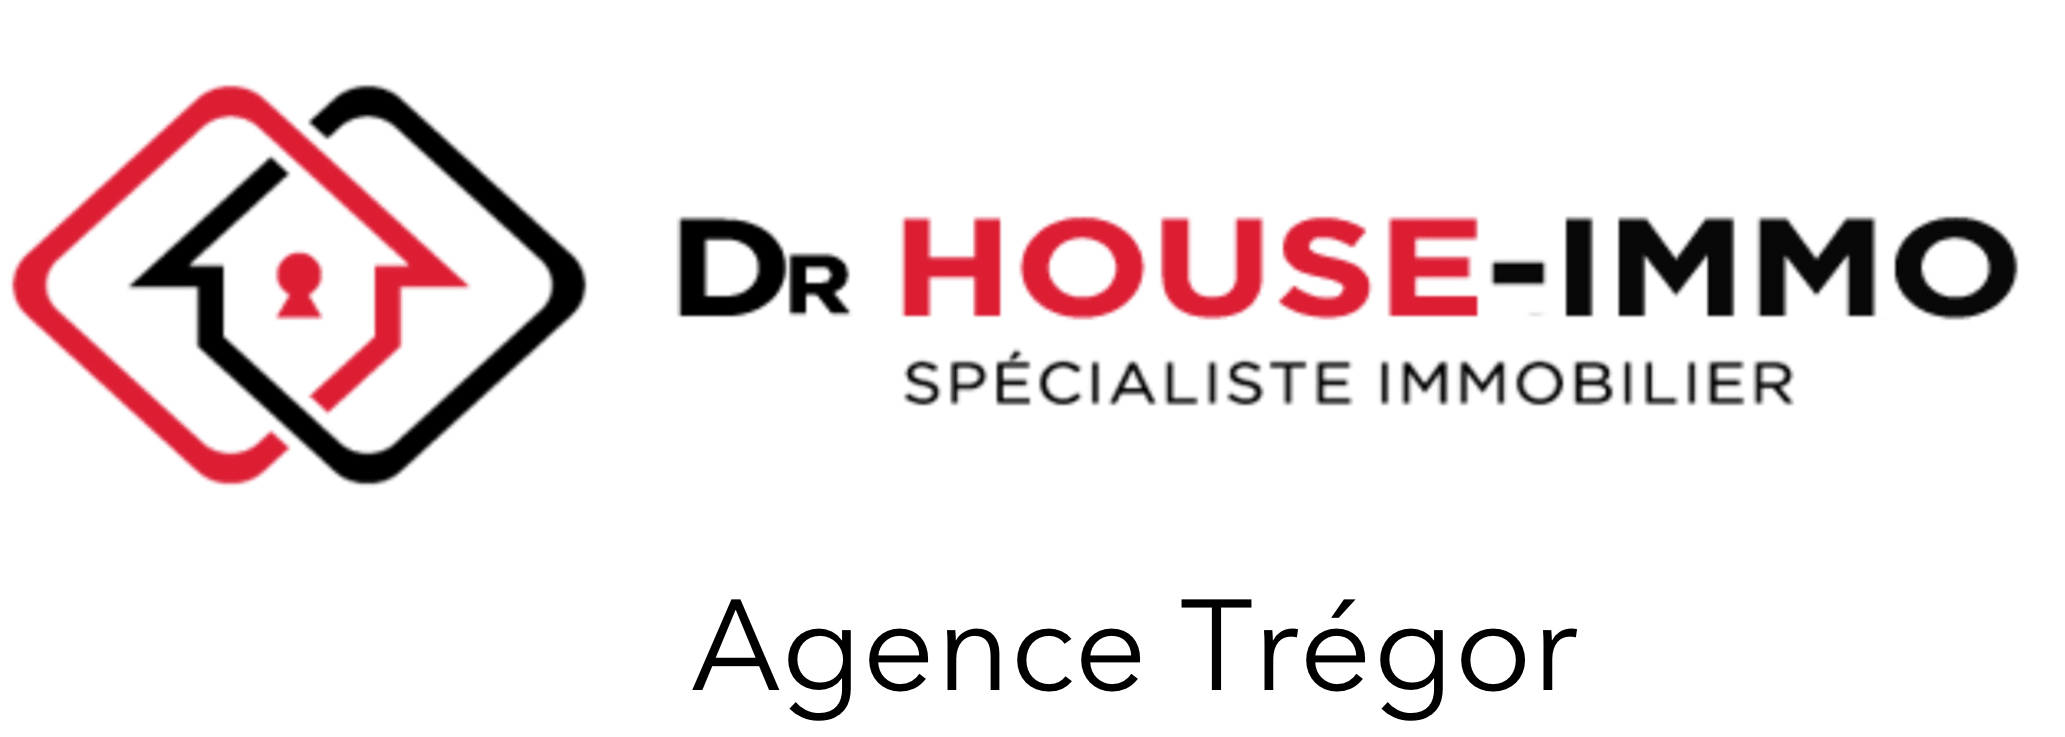 Dr House Immo Tregor